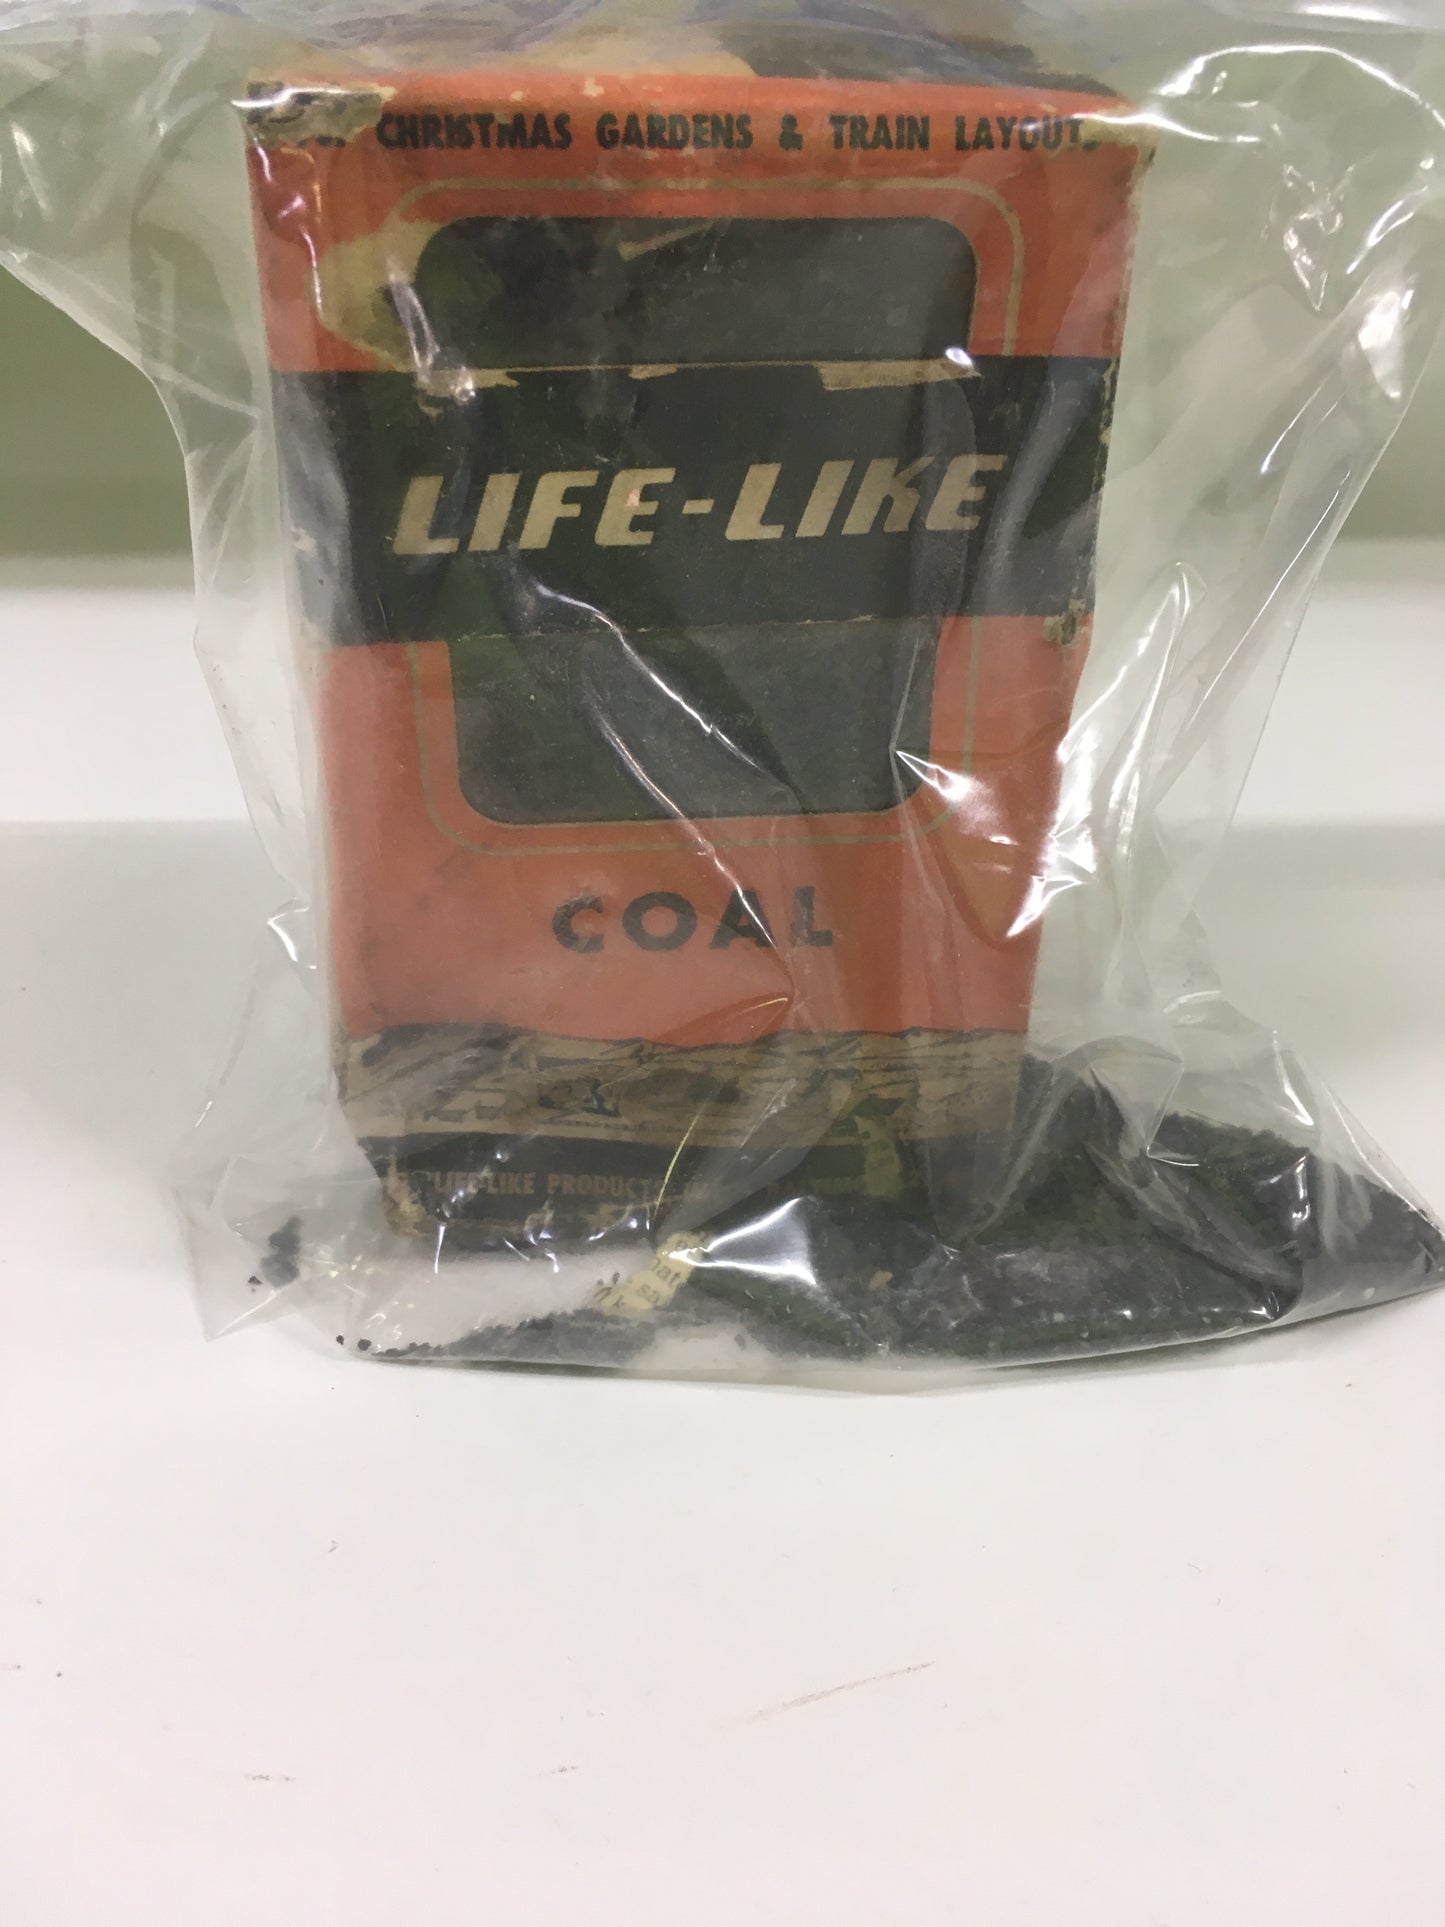 Life-Like Coal 1 LB 5 OZ